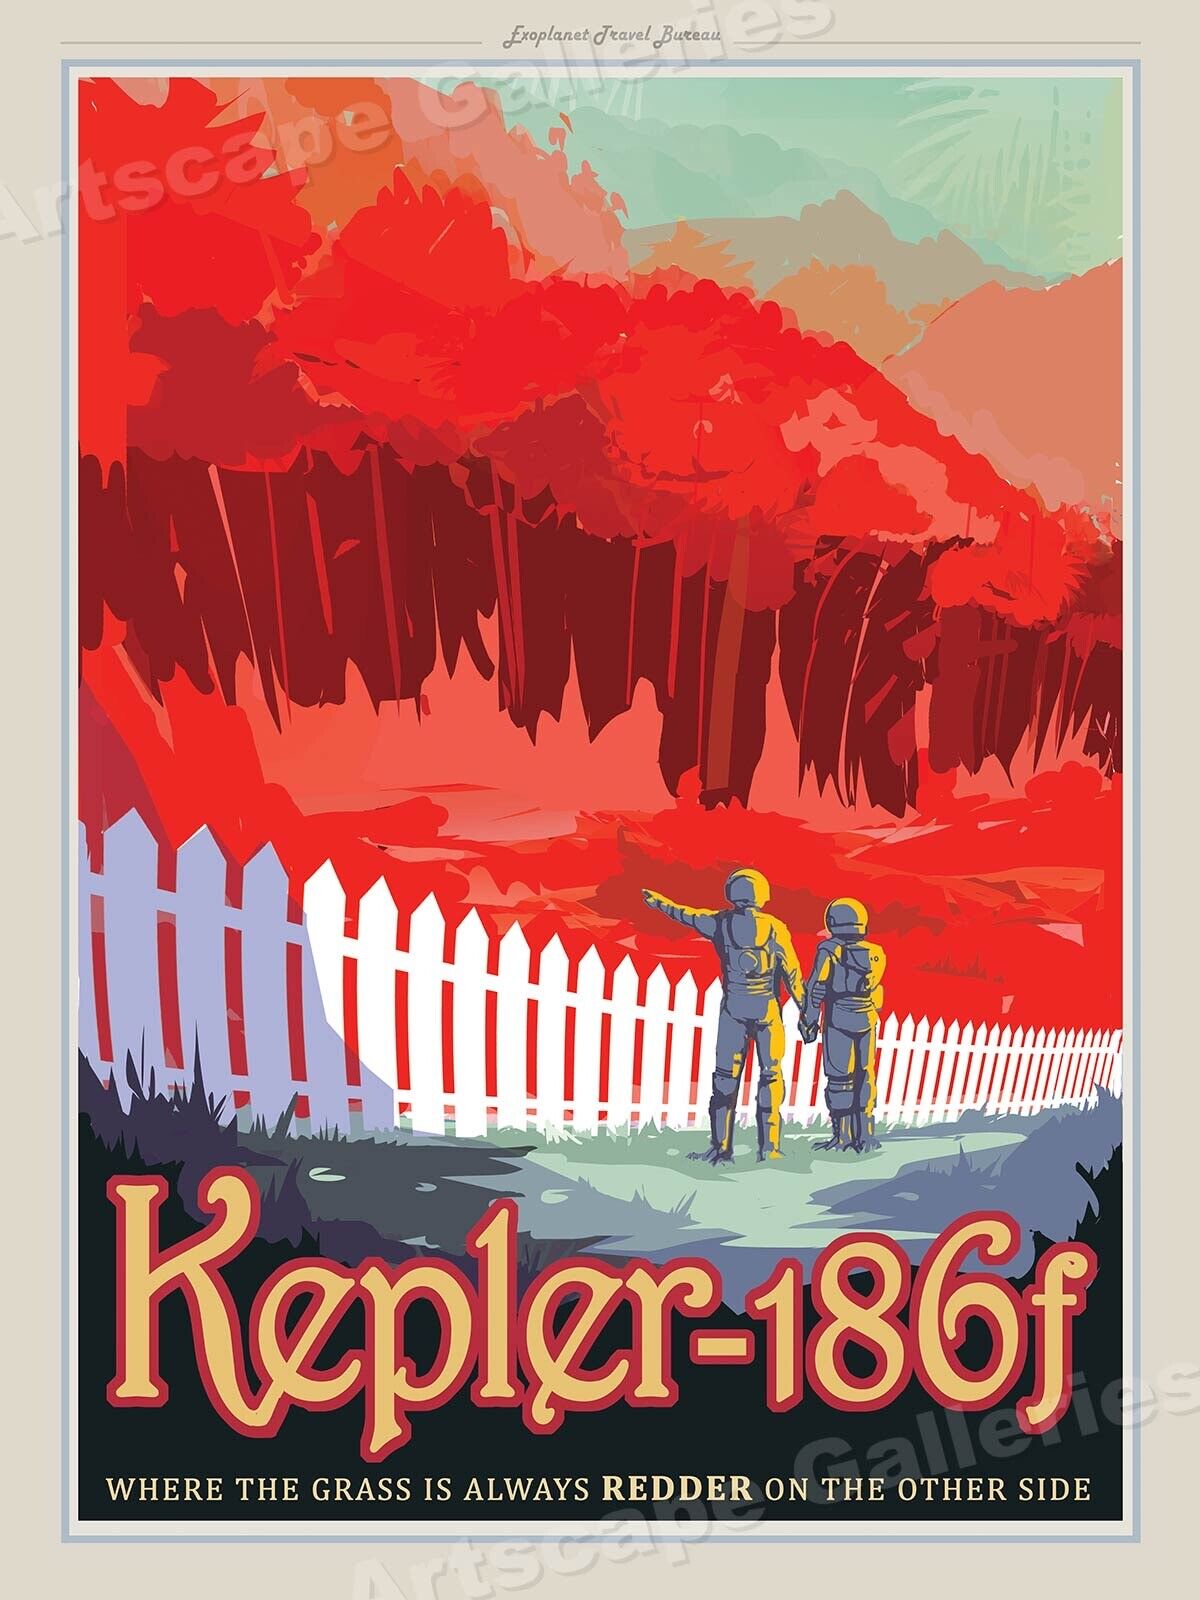 “Kepler-186f” Retro Style ExoPlanet Exploration NASA Travel Poster - 24x32